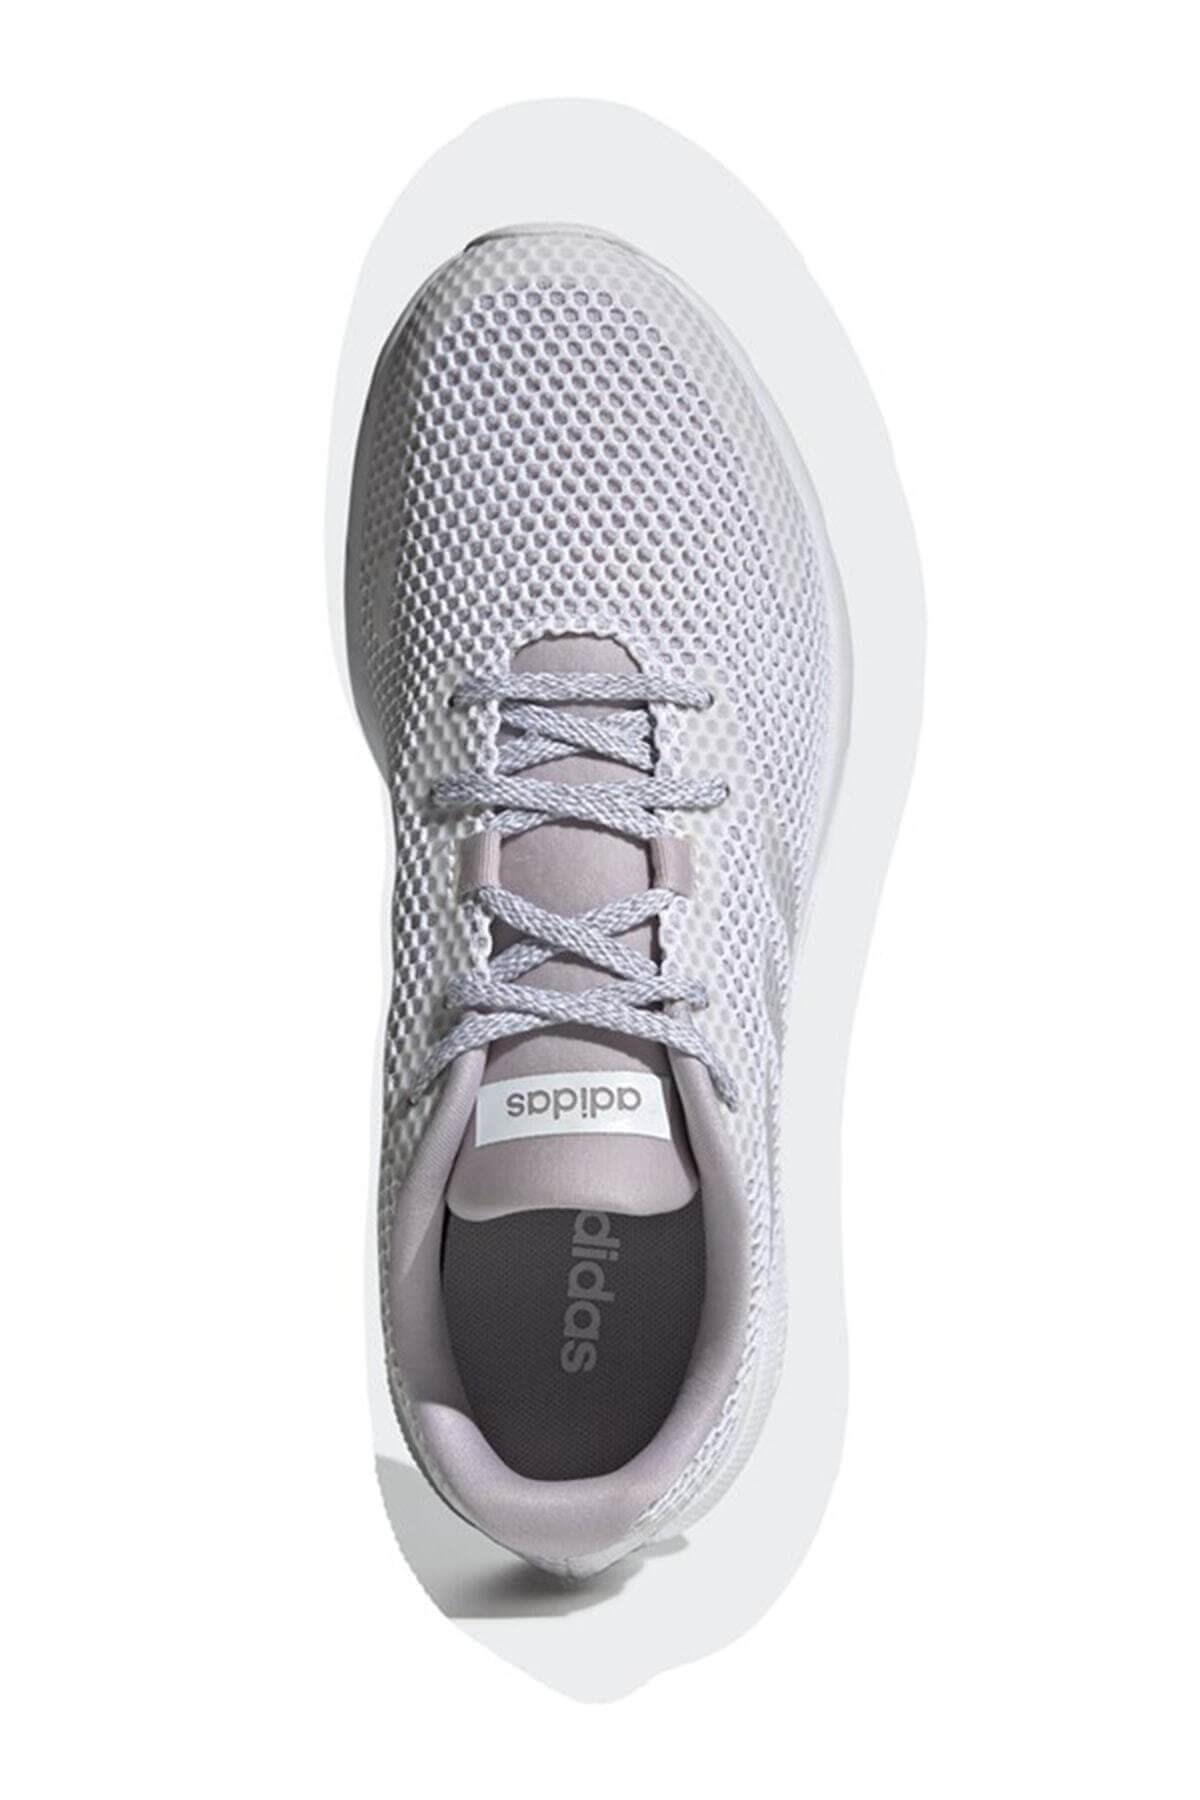 Adidas SOORAJ Kadın Yürüyüş Koşu Ayakkabı EE9932Bej - EE9932Bej - ADIDAS - Spor  Ayakkabı - Spor Giyim - Çanta - Aksesuar | sahilspor.com